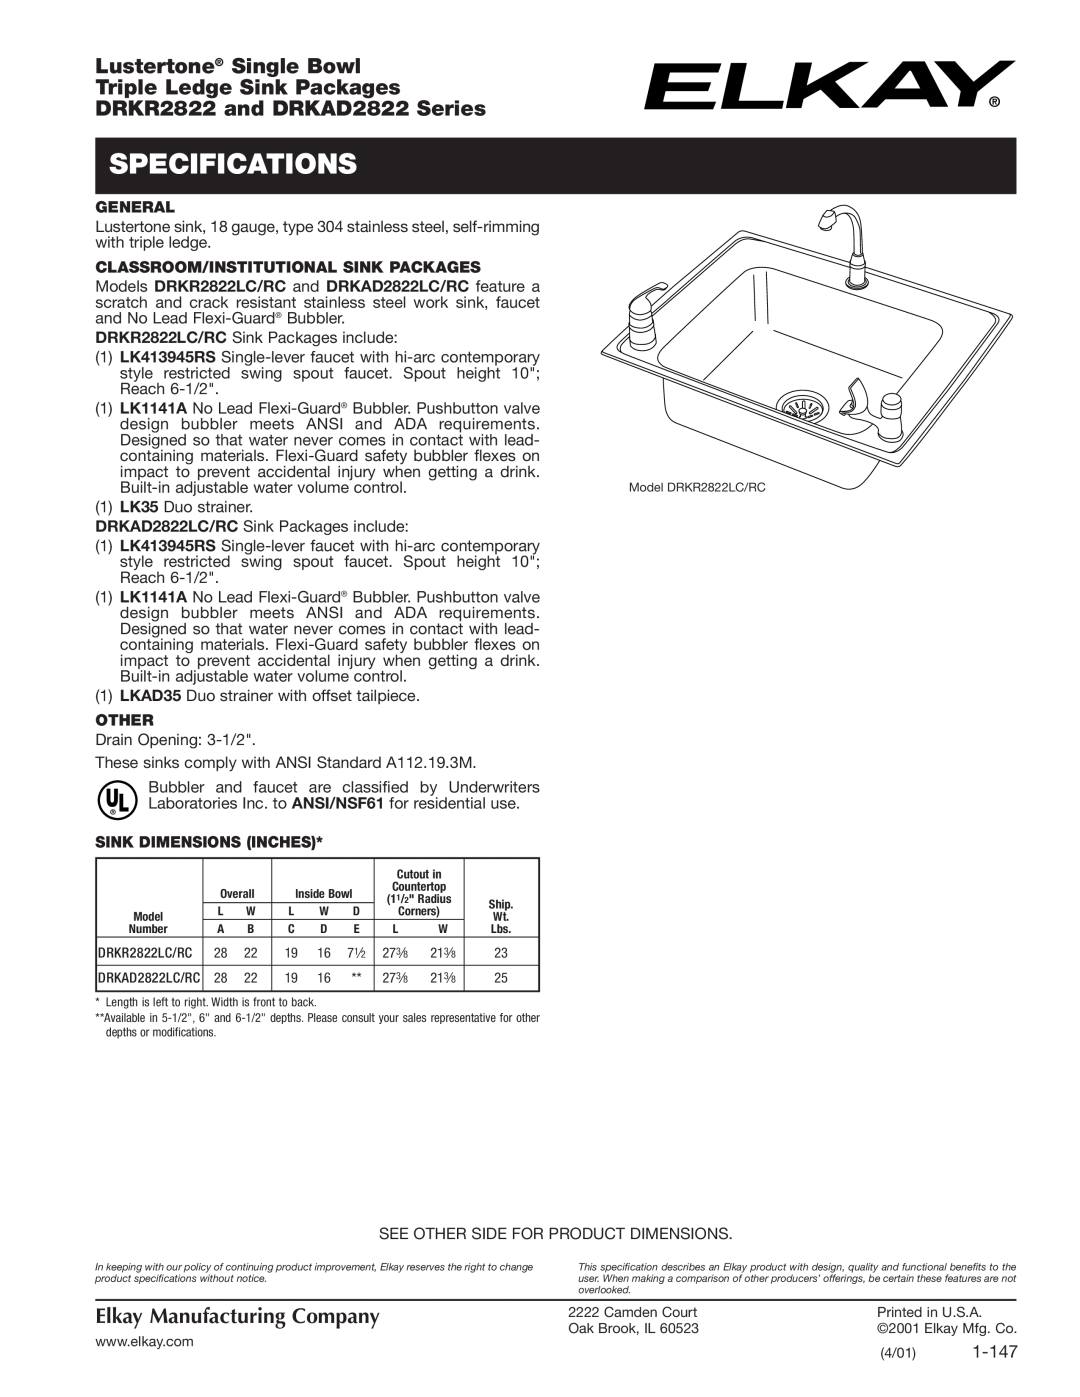 Elkay DRKAD2822, DRKR2822 specifications Specifications, Lustertone Single Bowl Triple Ledge Sink Packages, 1-147 